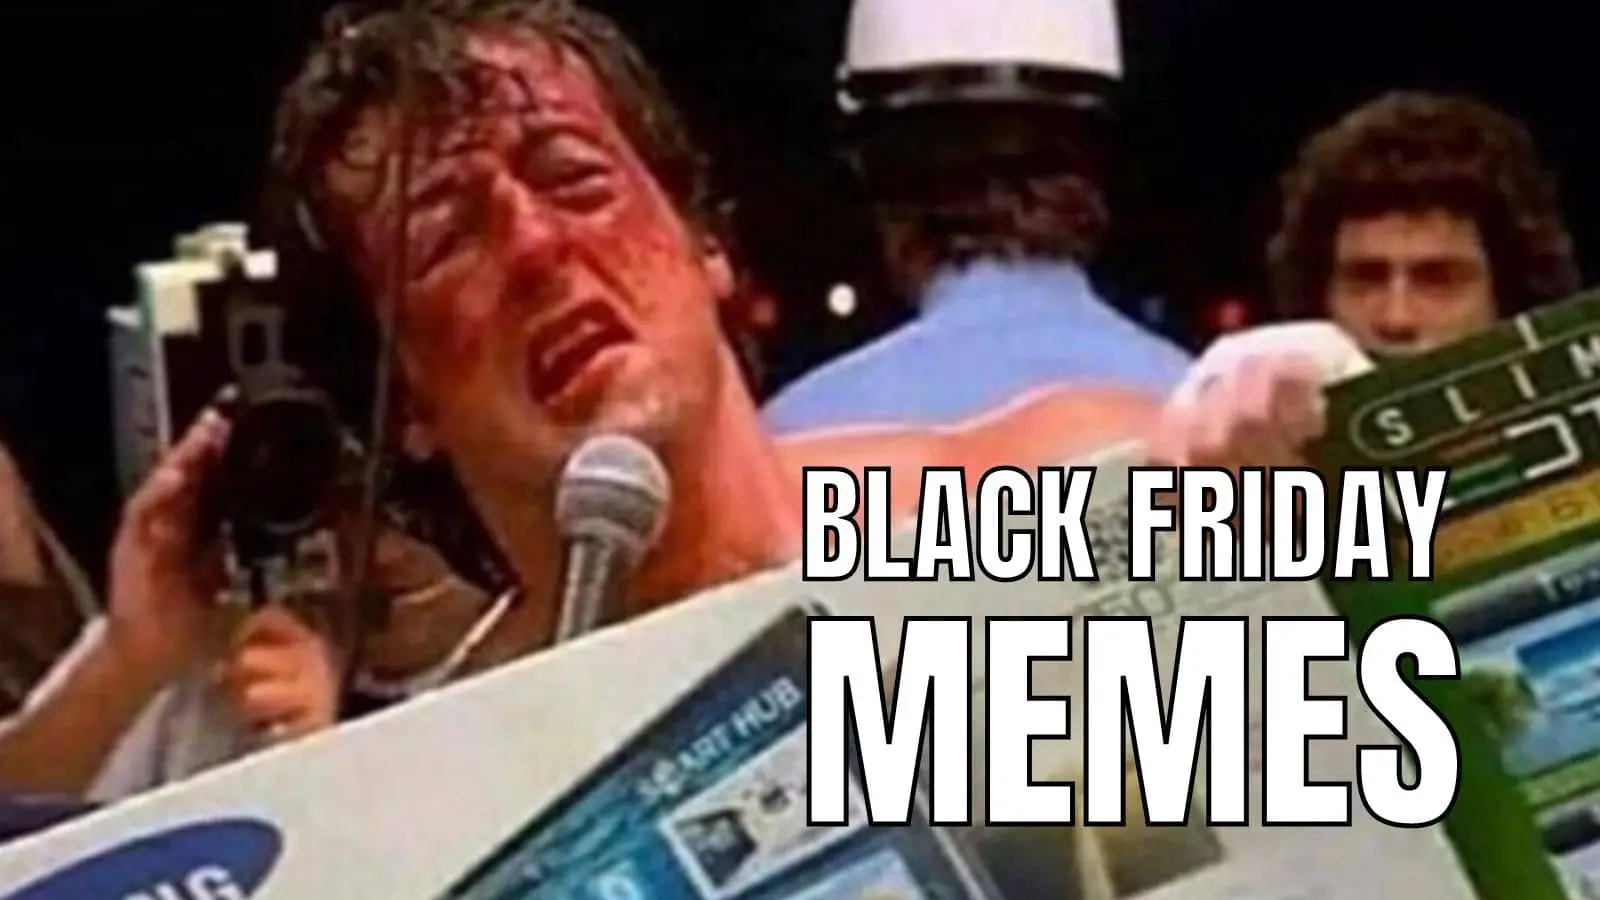 Funny Black Friday Memes on Shopping